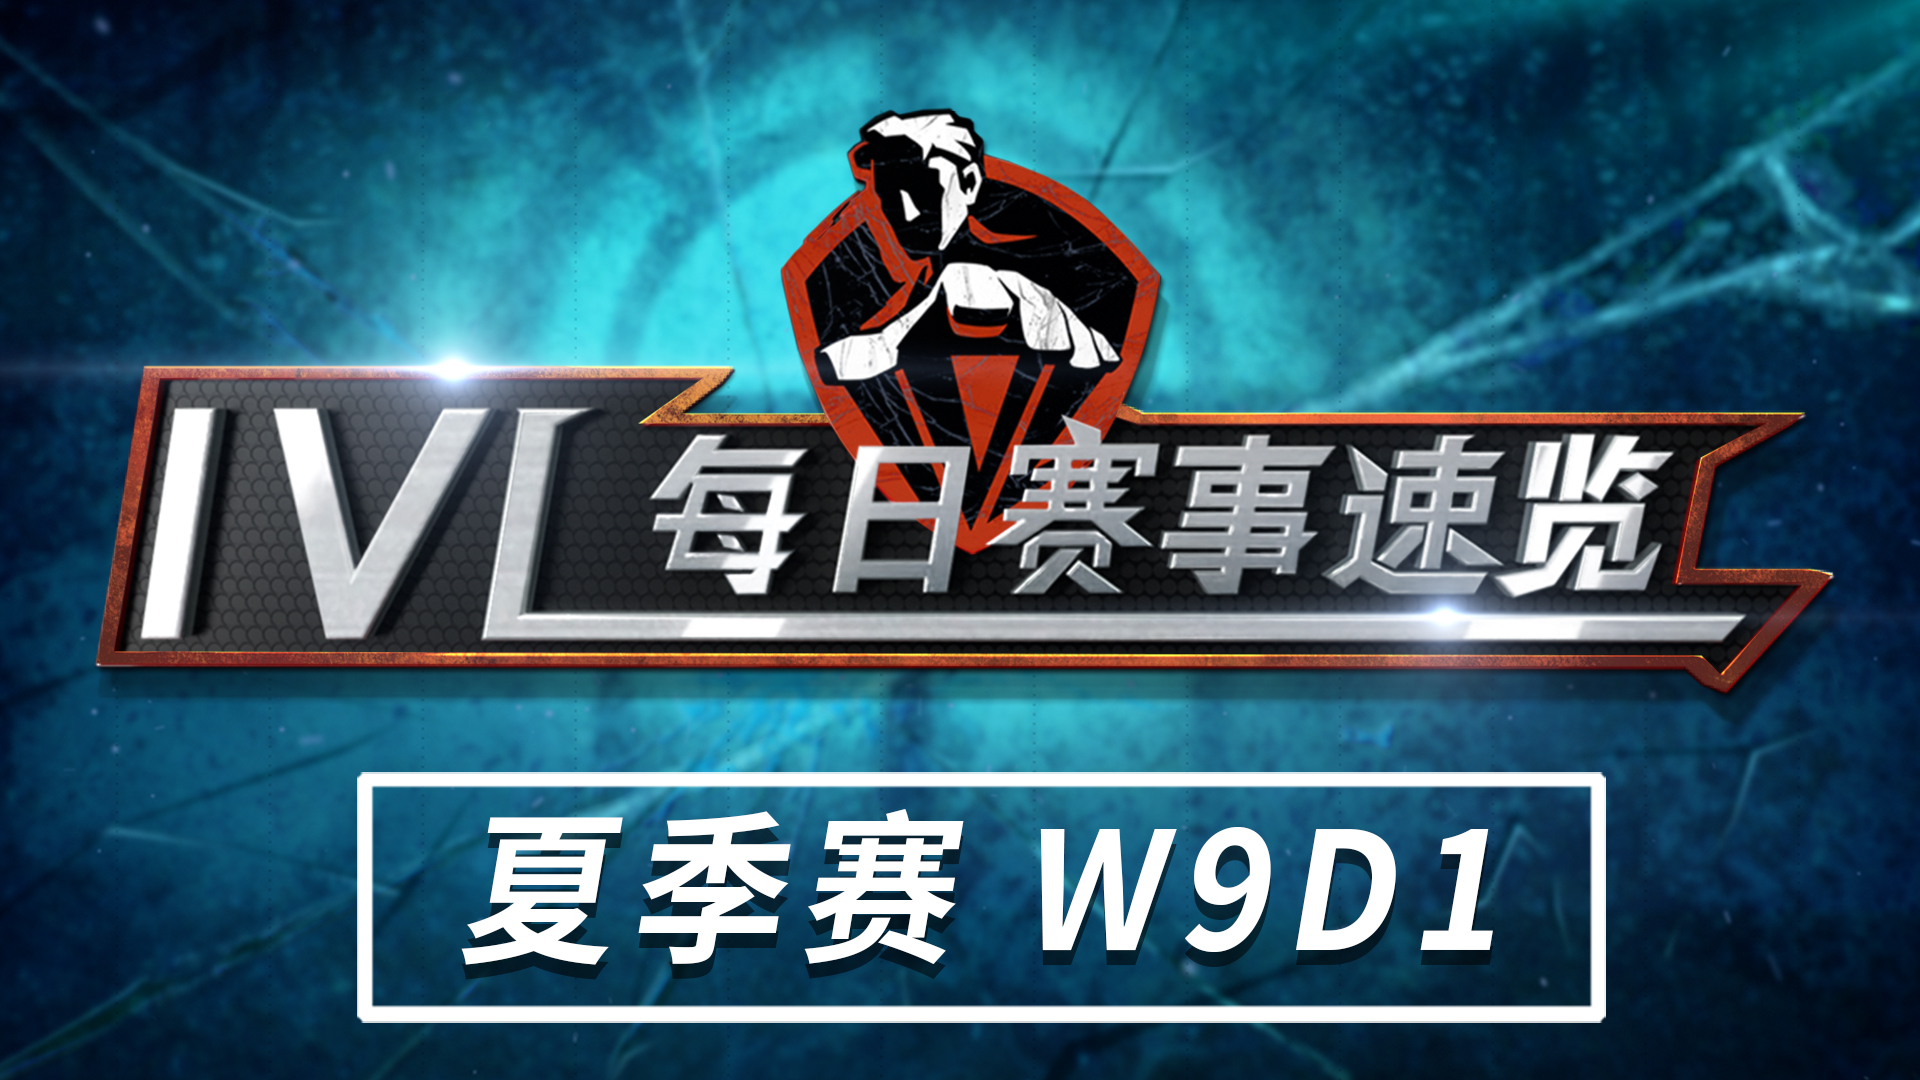 【2020IVL】夏季赛W9D1赛事速览